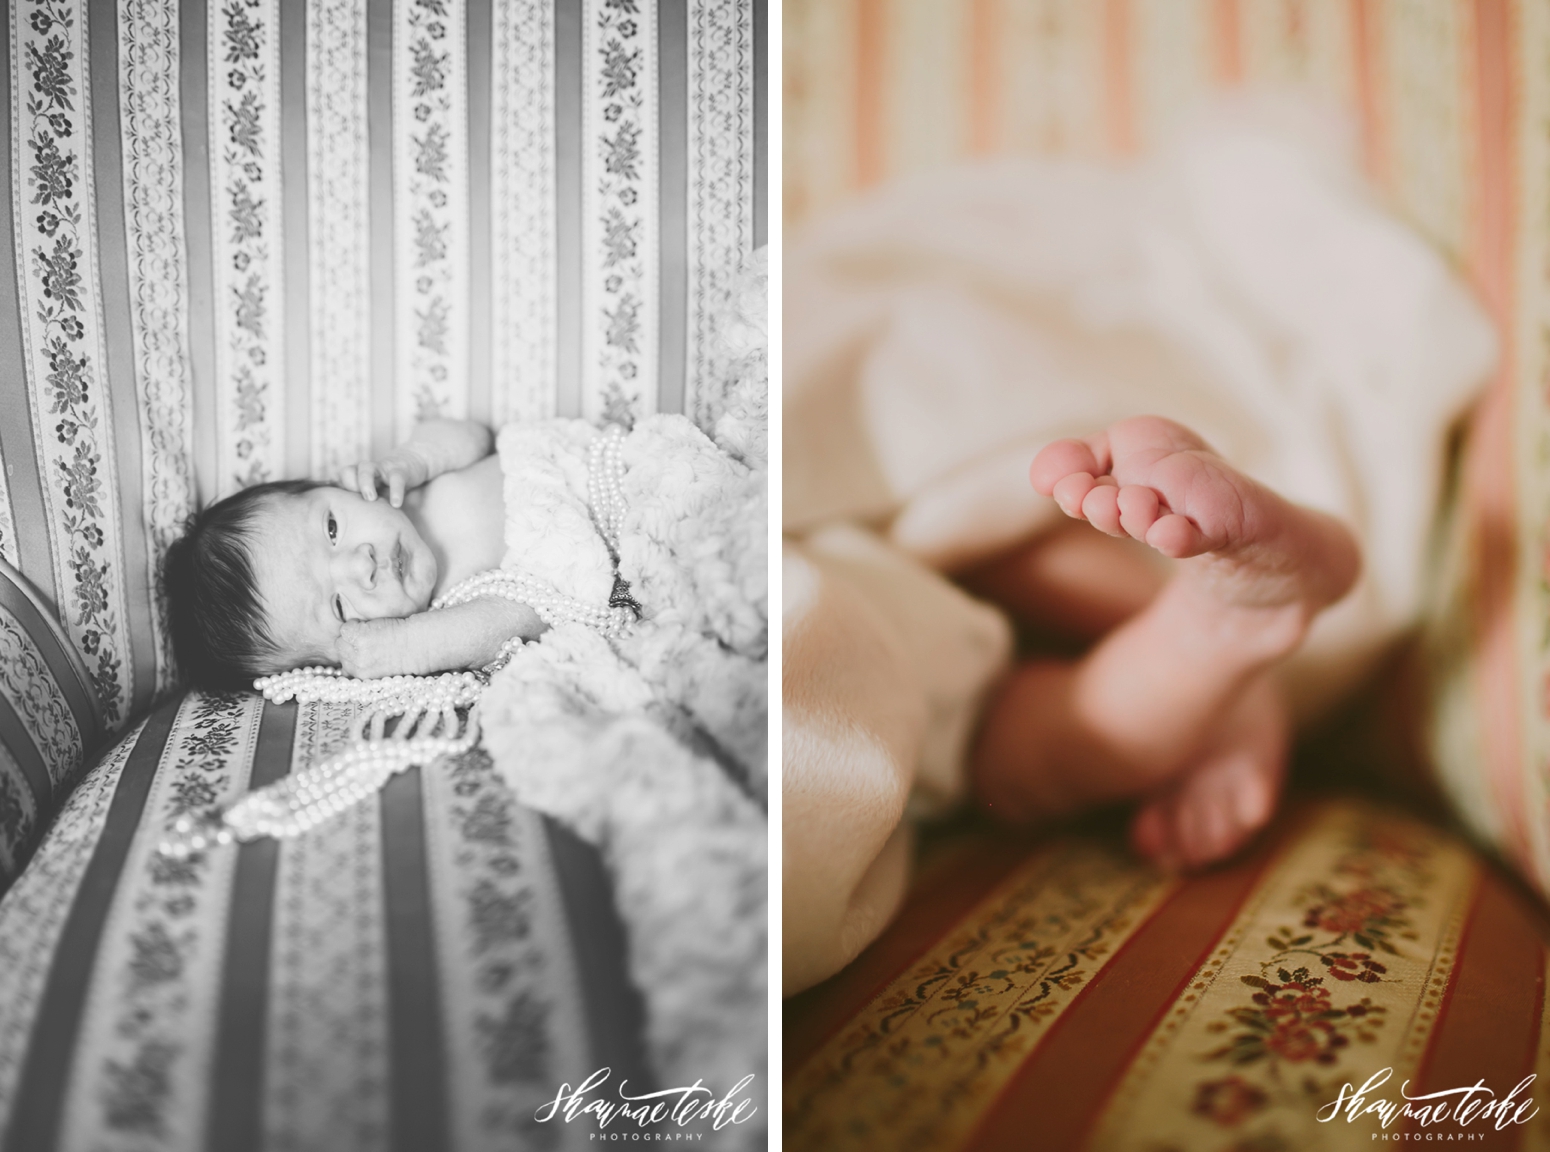 shaunae_teske_wisconsin_photographer_kinslee-newborn-22